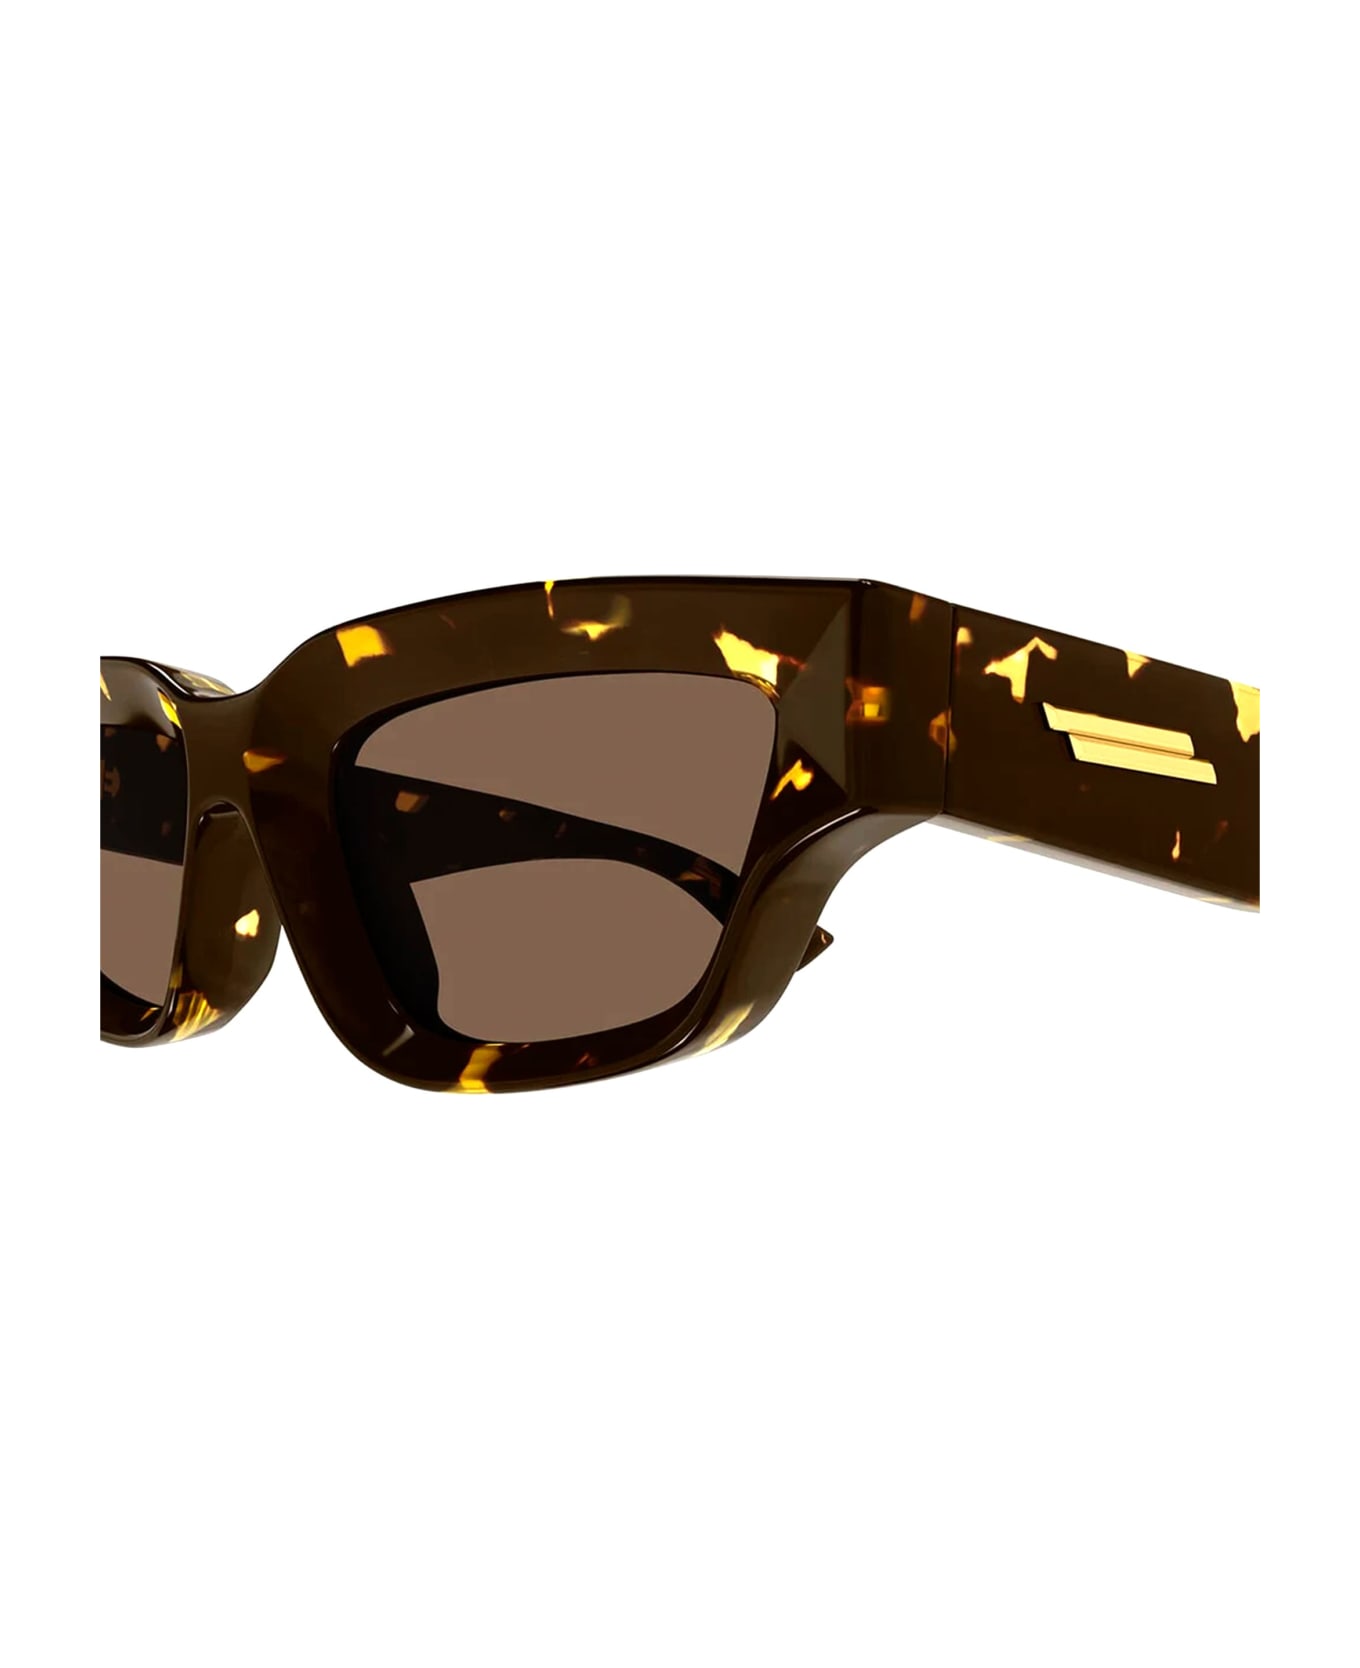 Bottega Veneta Eyewear Bv1250s-002 - Tortoise Sunglasses - Tortoise サングラス